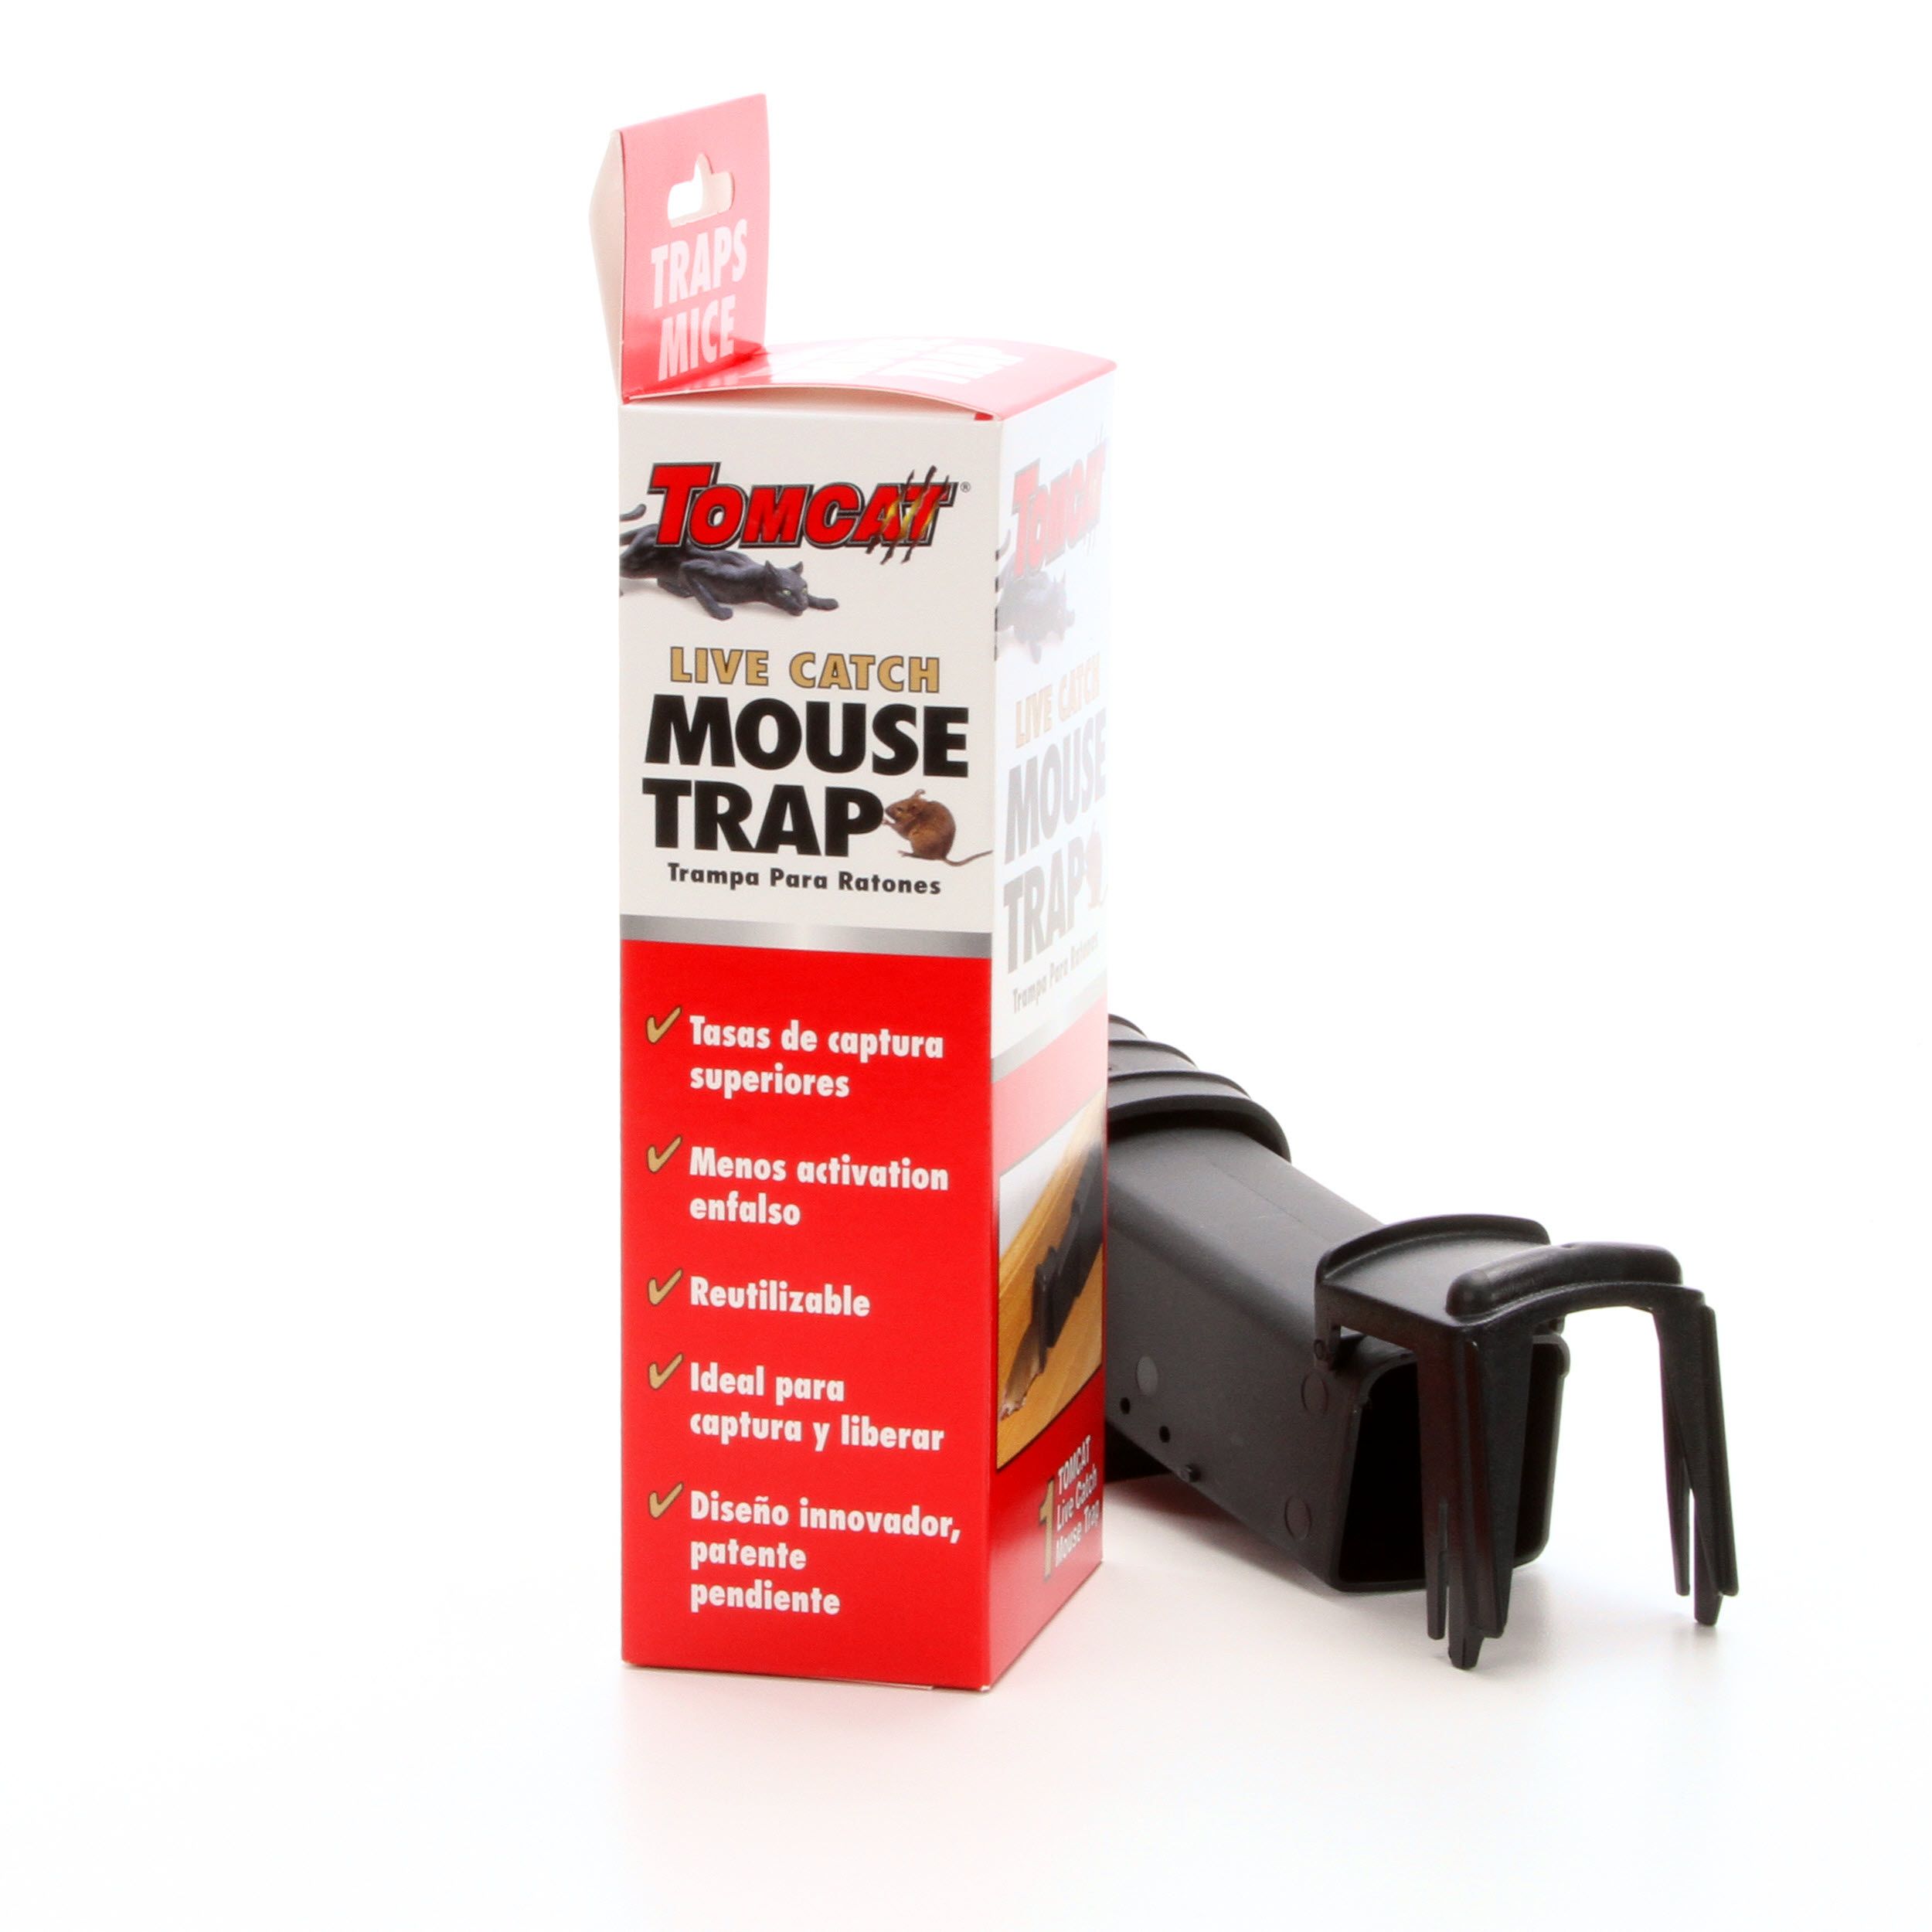 TOMCAT 2pk Single Live Catch Mouse Trap 33538 for sale online 